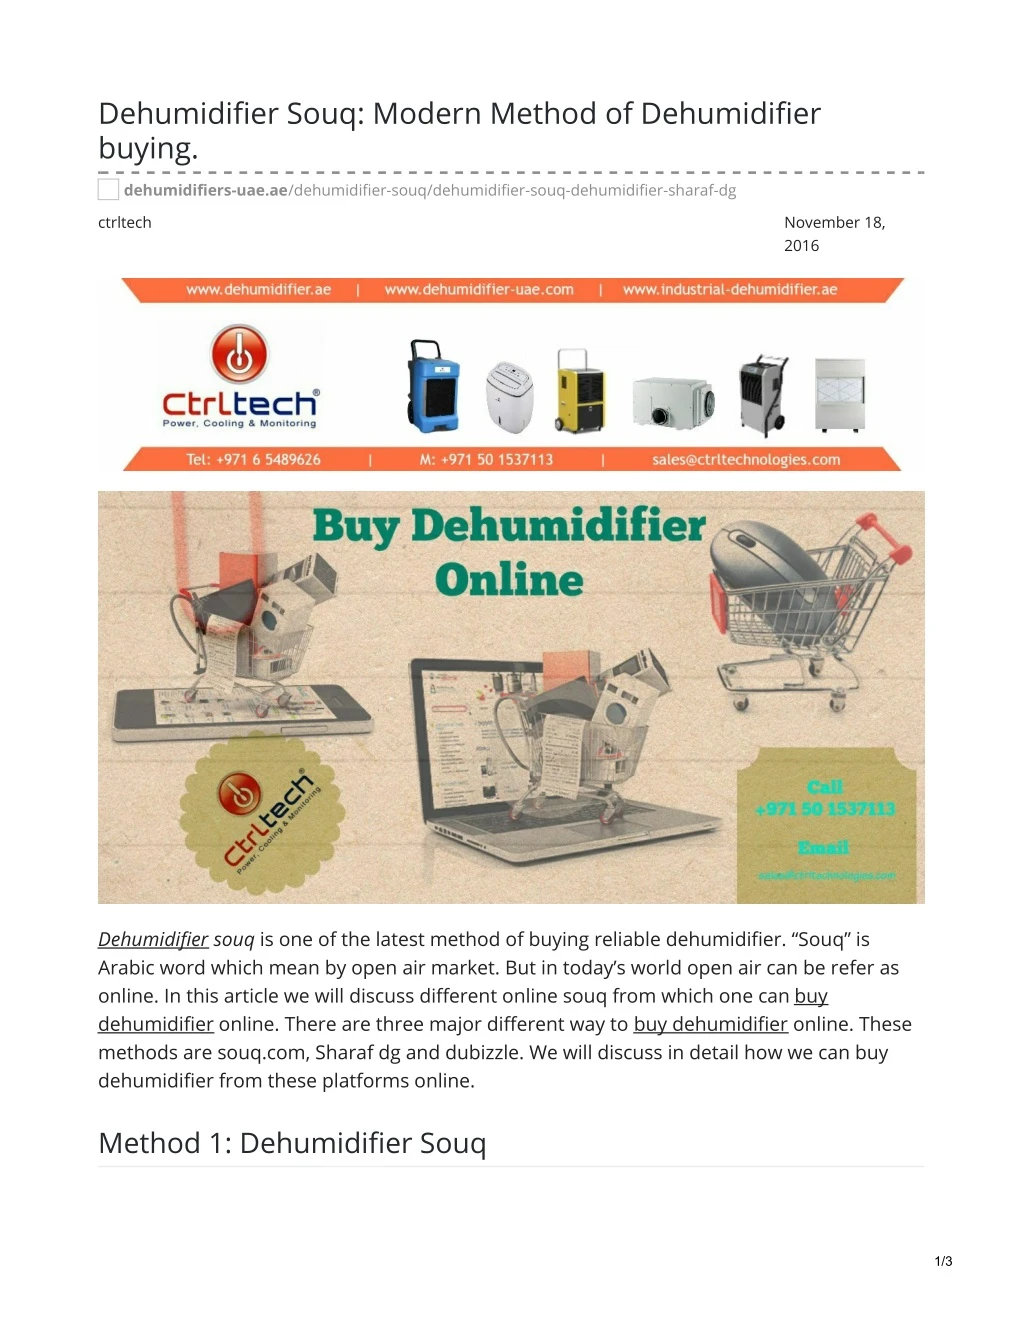 dehumidifier souq modern method of dehumidifier